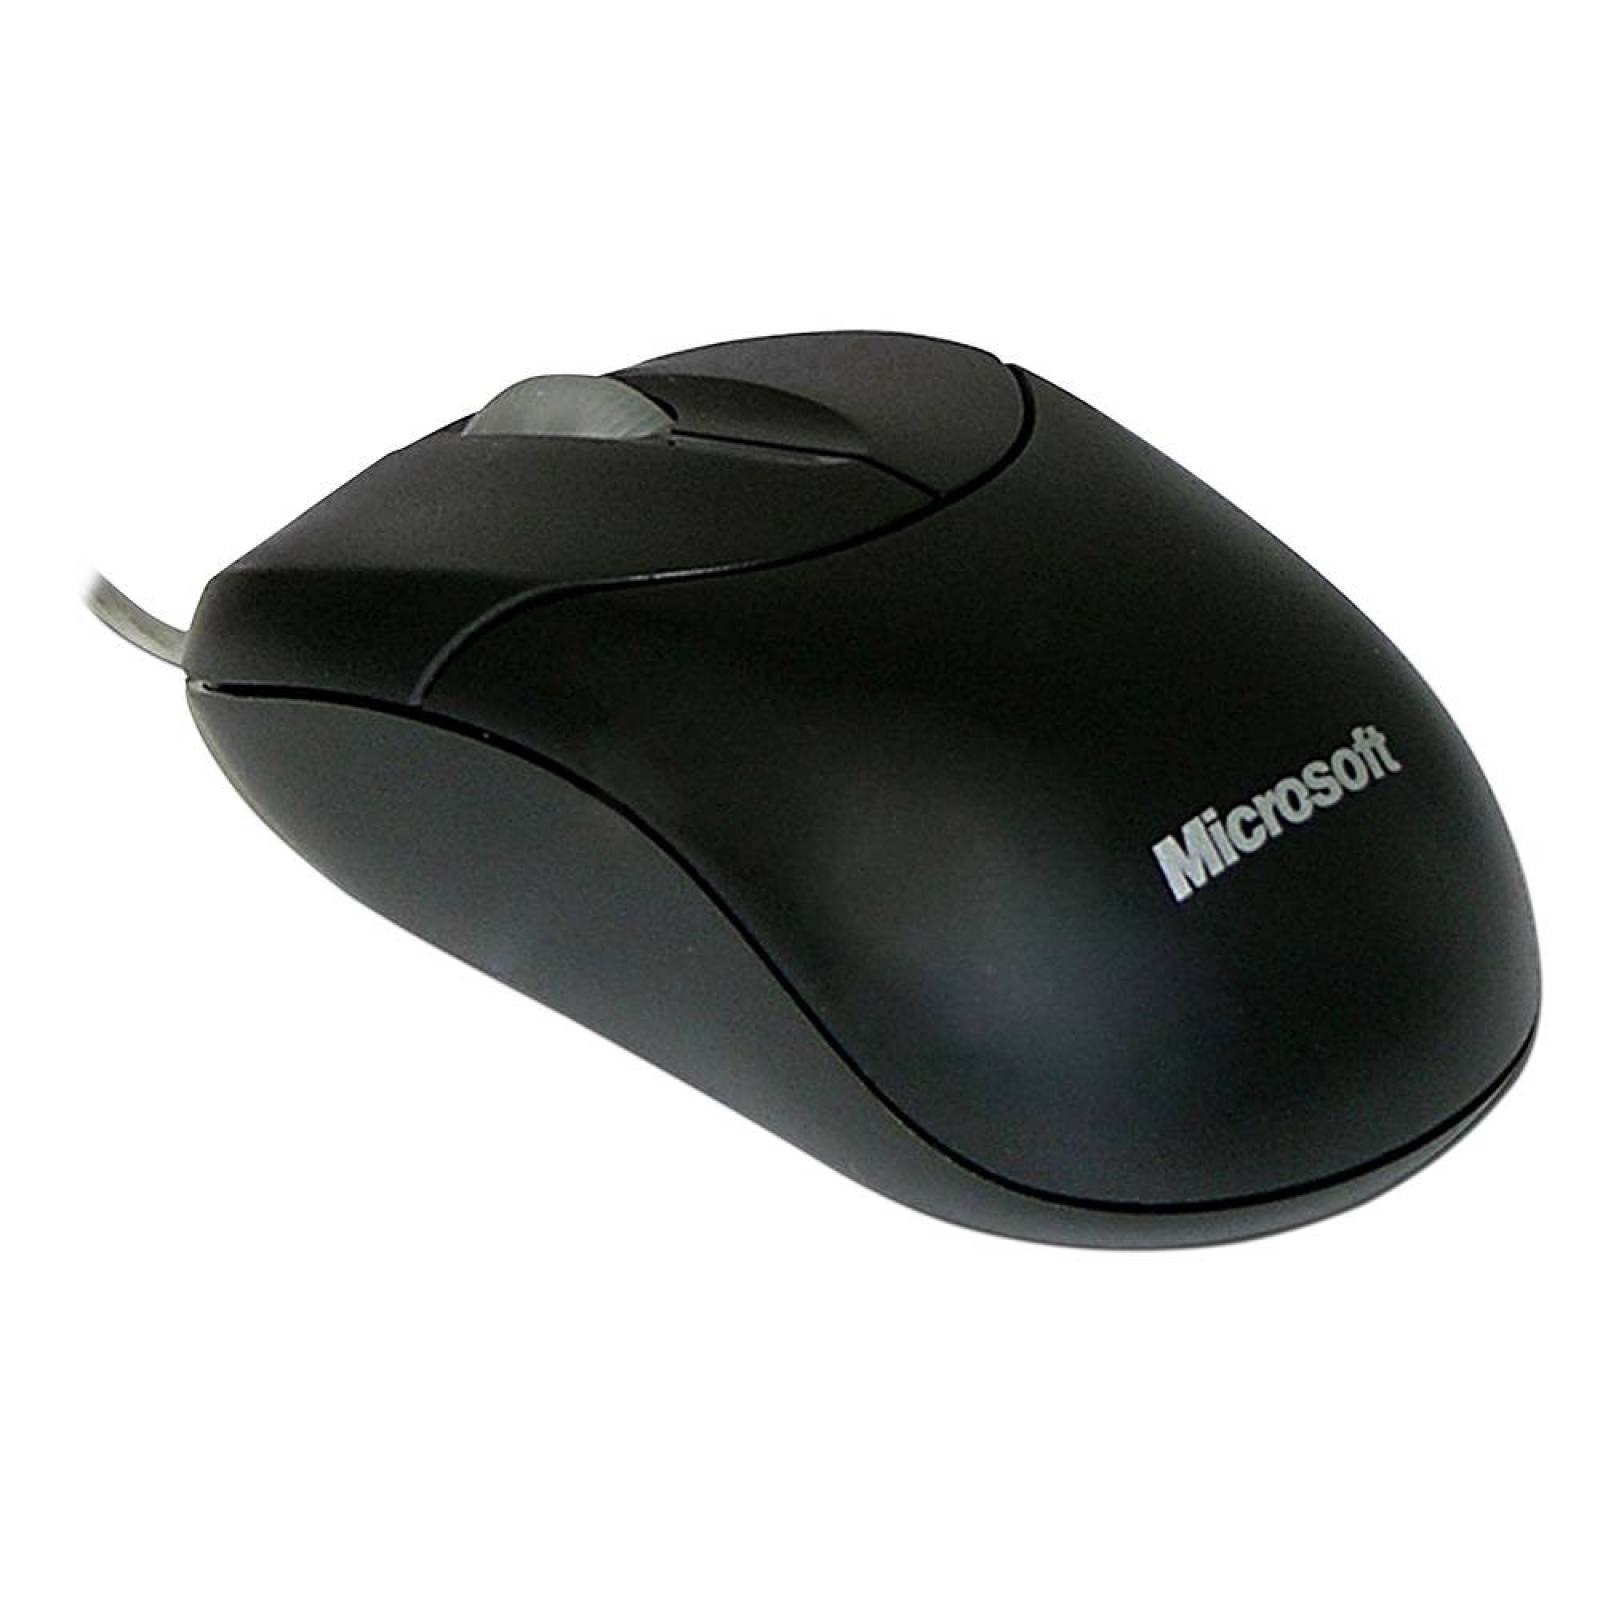 Mouse Microsoft Compact Optical Mouse 500, USB.